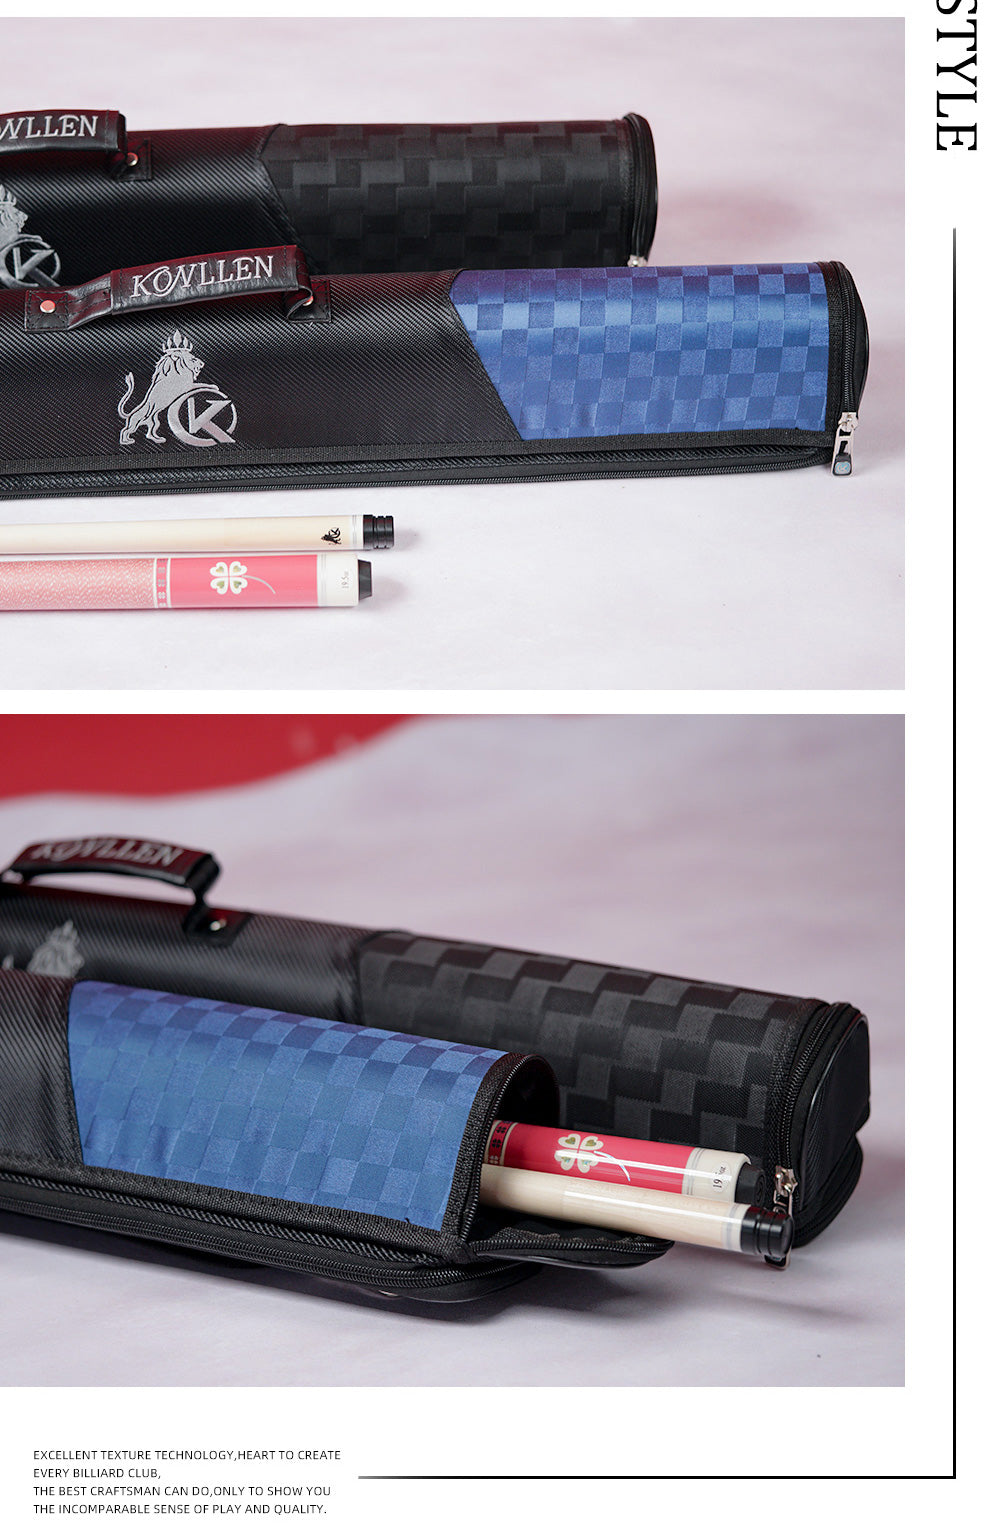 KONLLEN Hard Cue Case Bag, Billiard Stick Carrying Case, 6 Holes, 2x4 Pool Case, 86cm Length, Oxford Cloth, Billiard Accessories